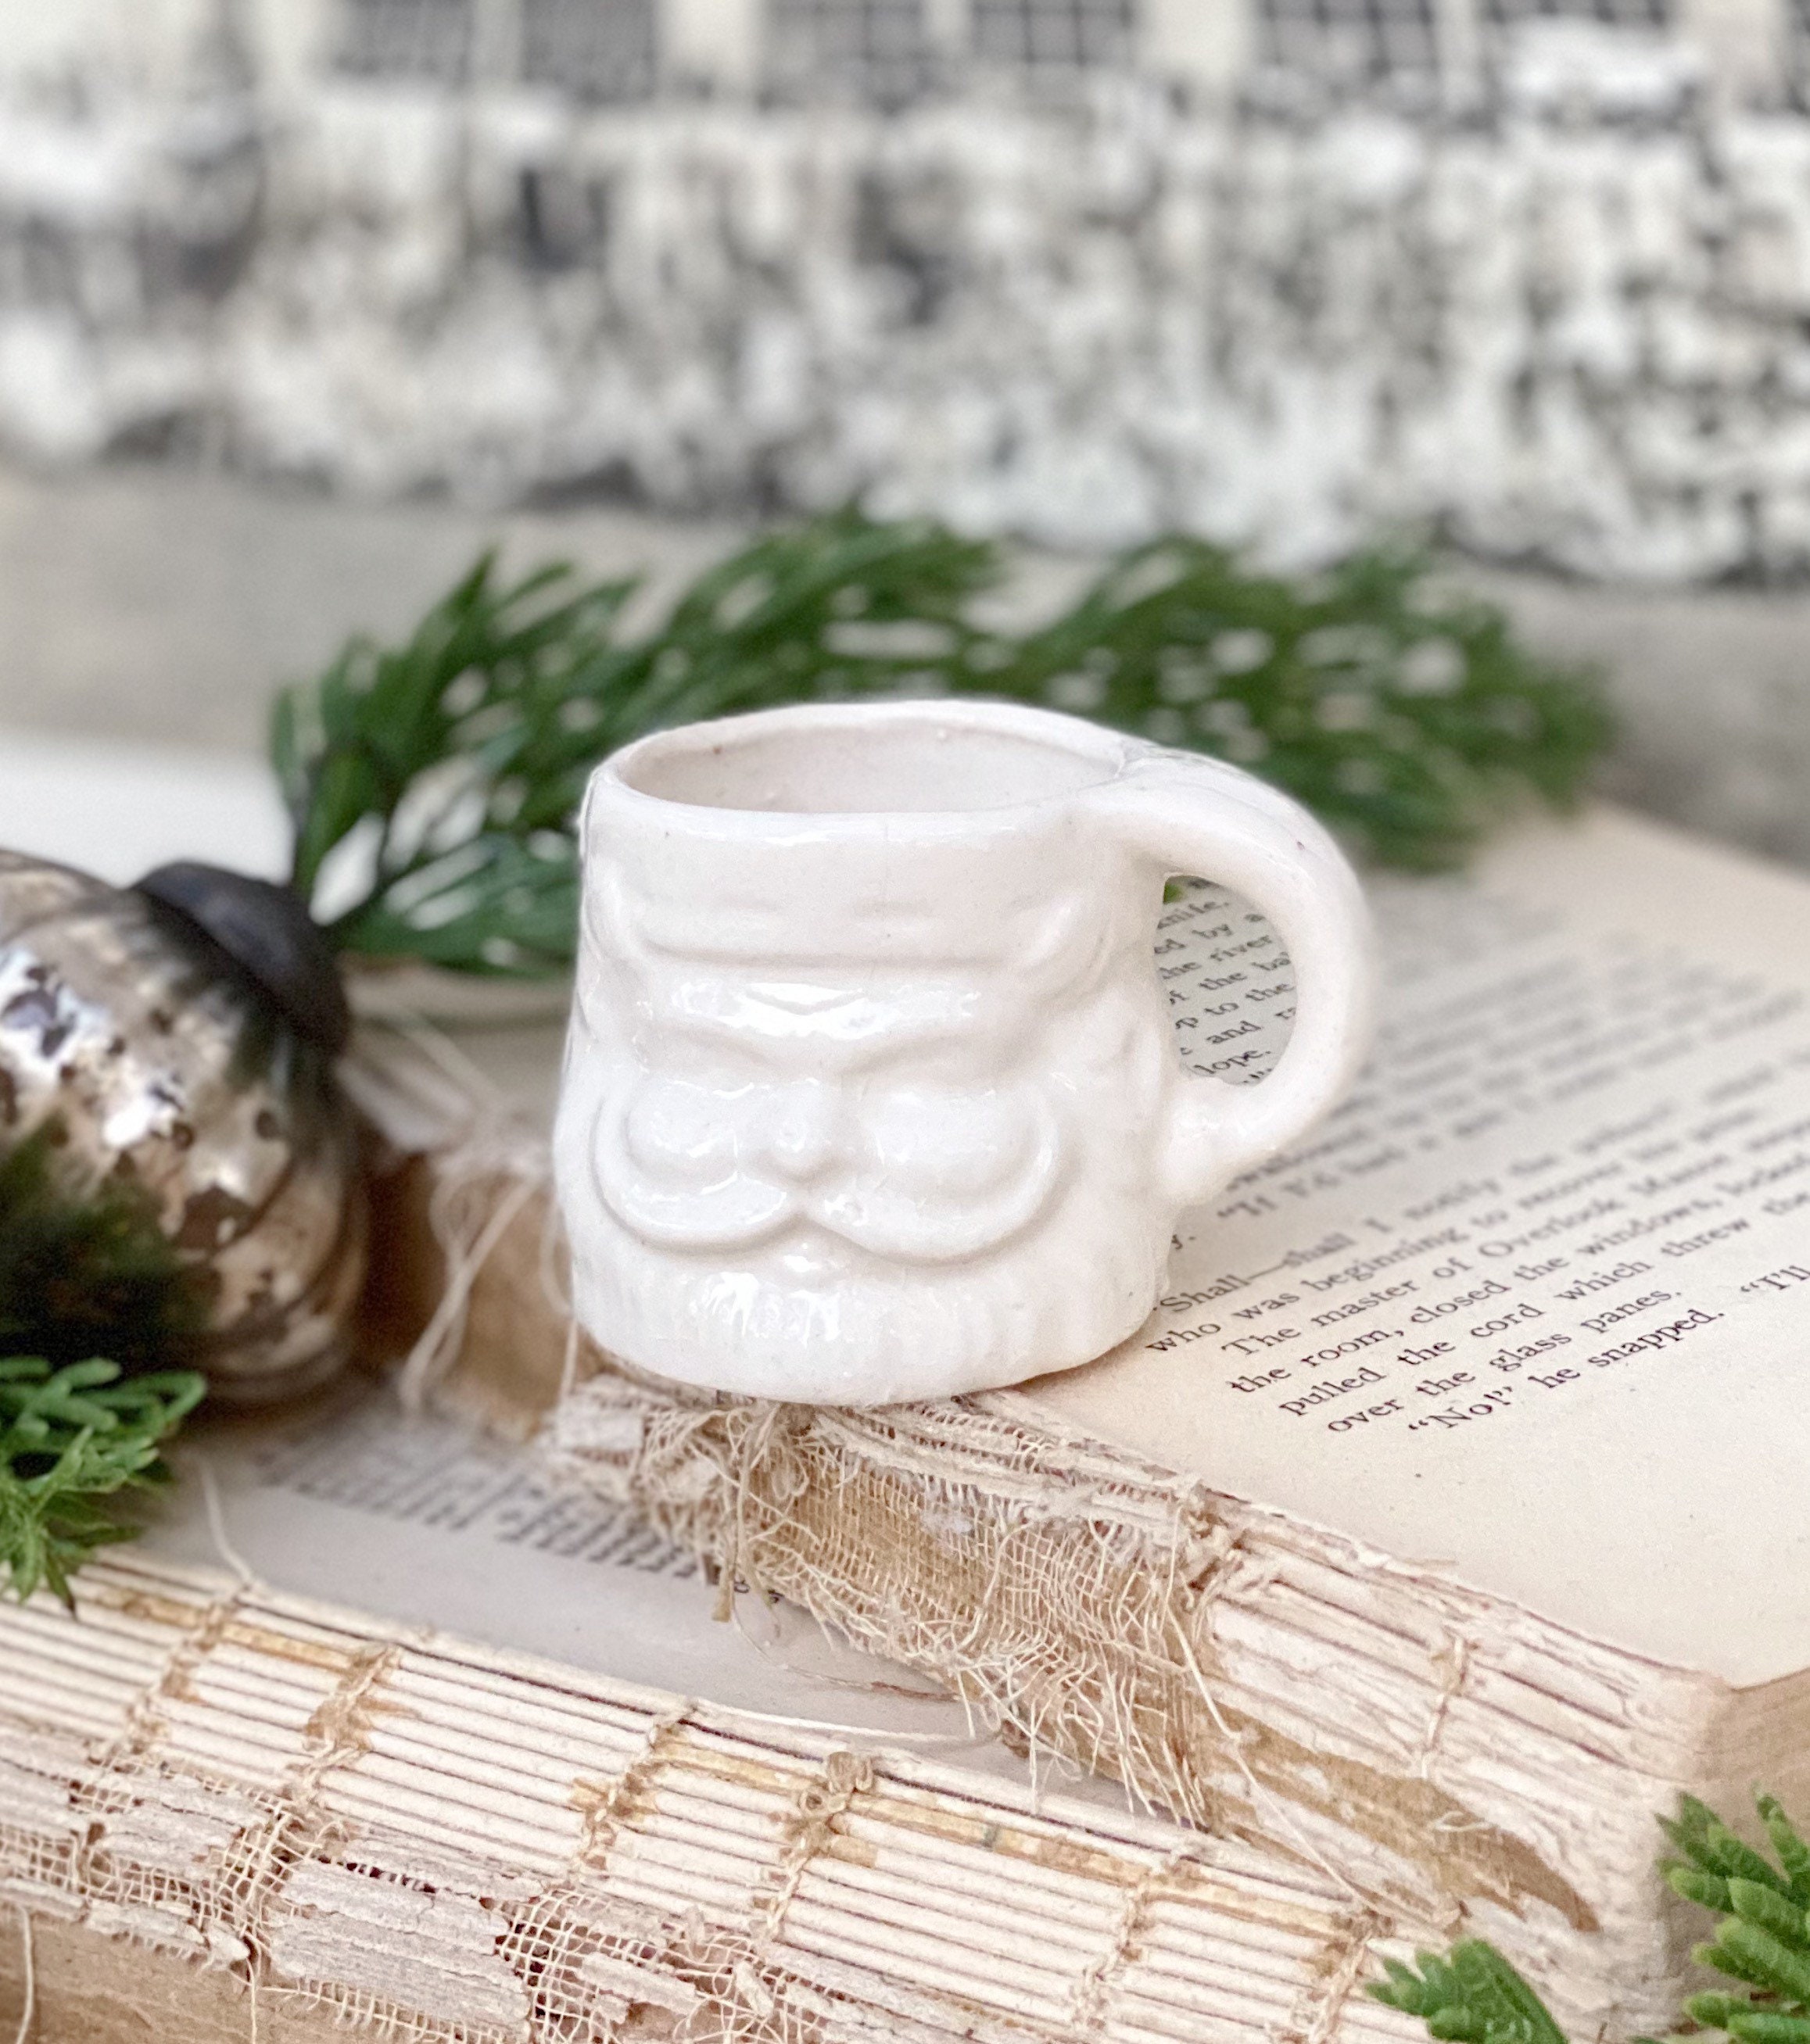 Santa Claus Glass Coffee Mug, Santa Claus Mugs